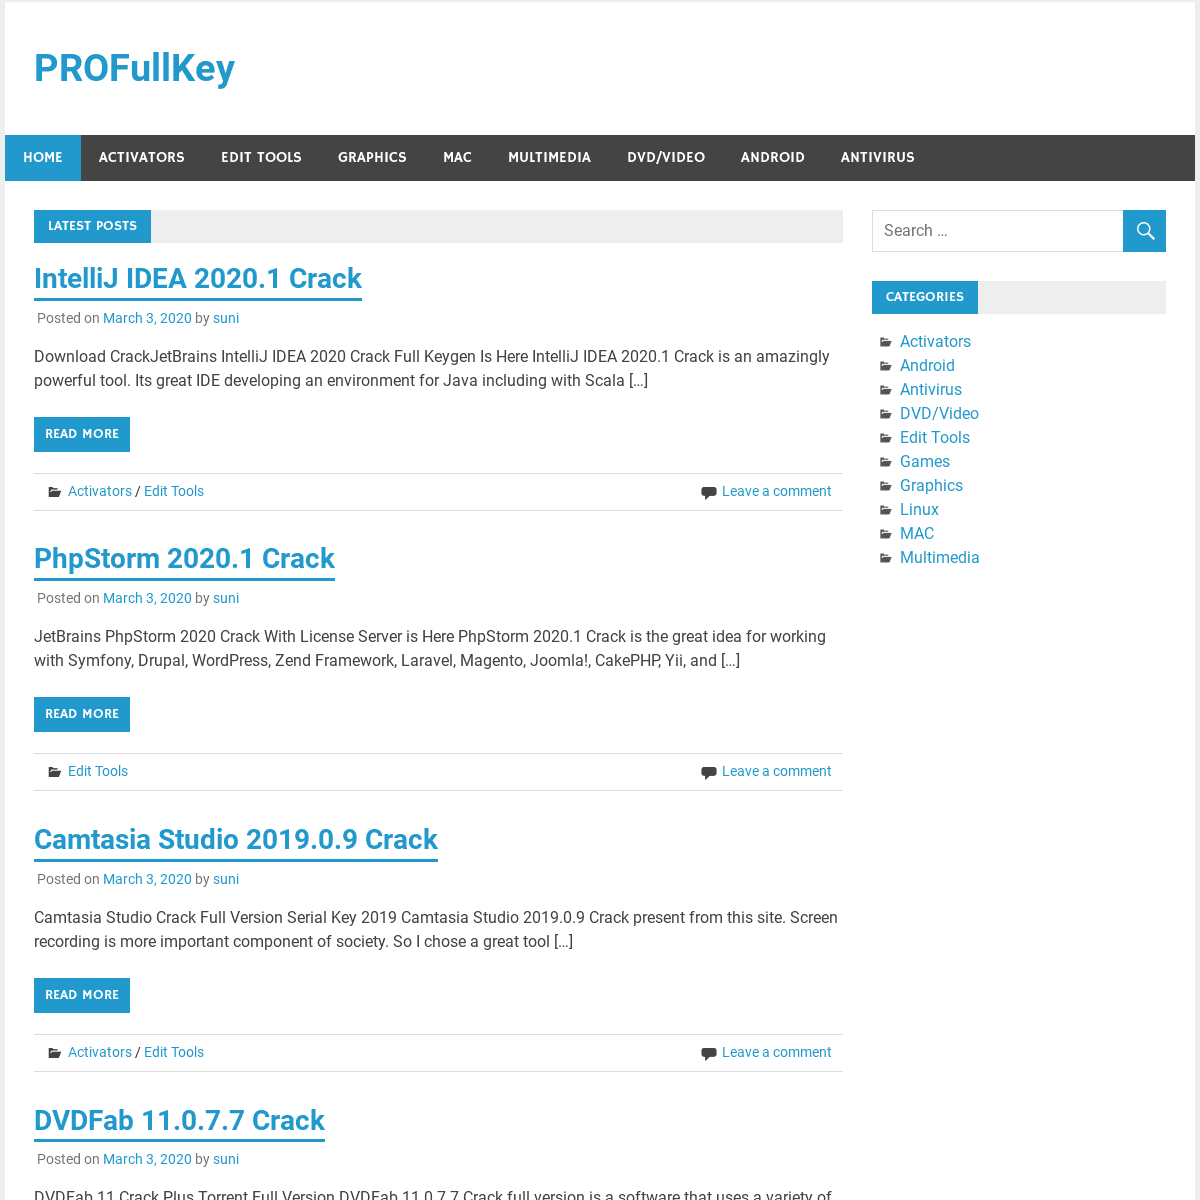 A complete backup of profullkey.com